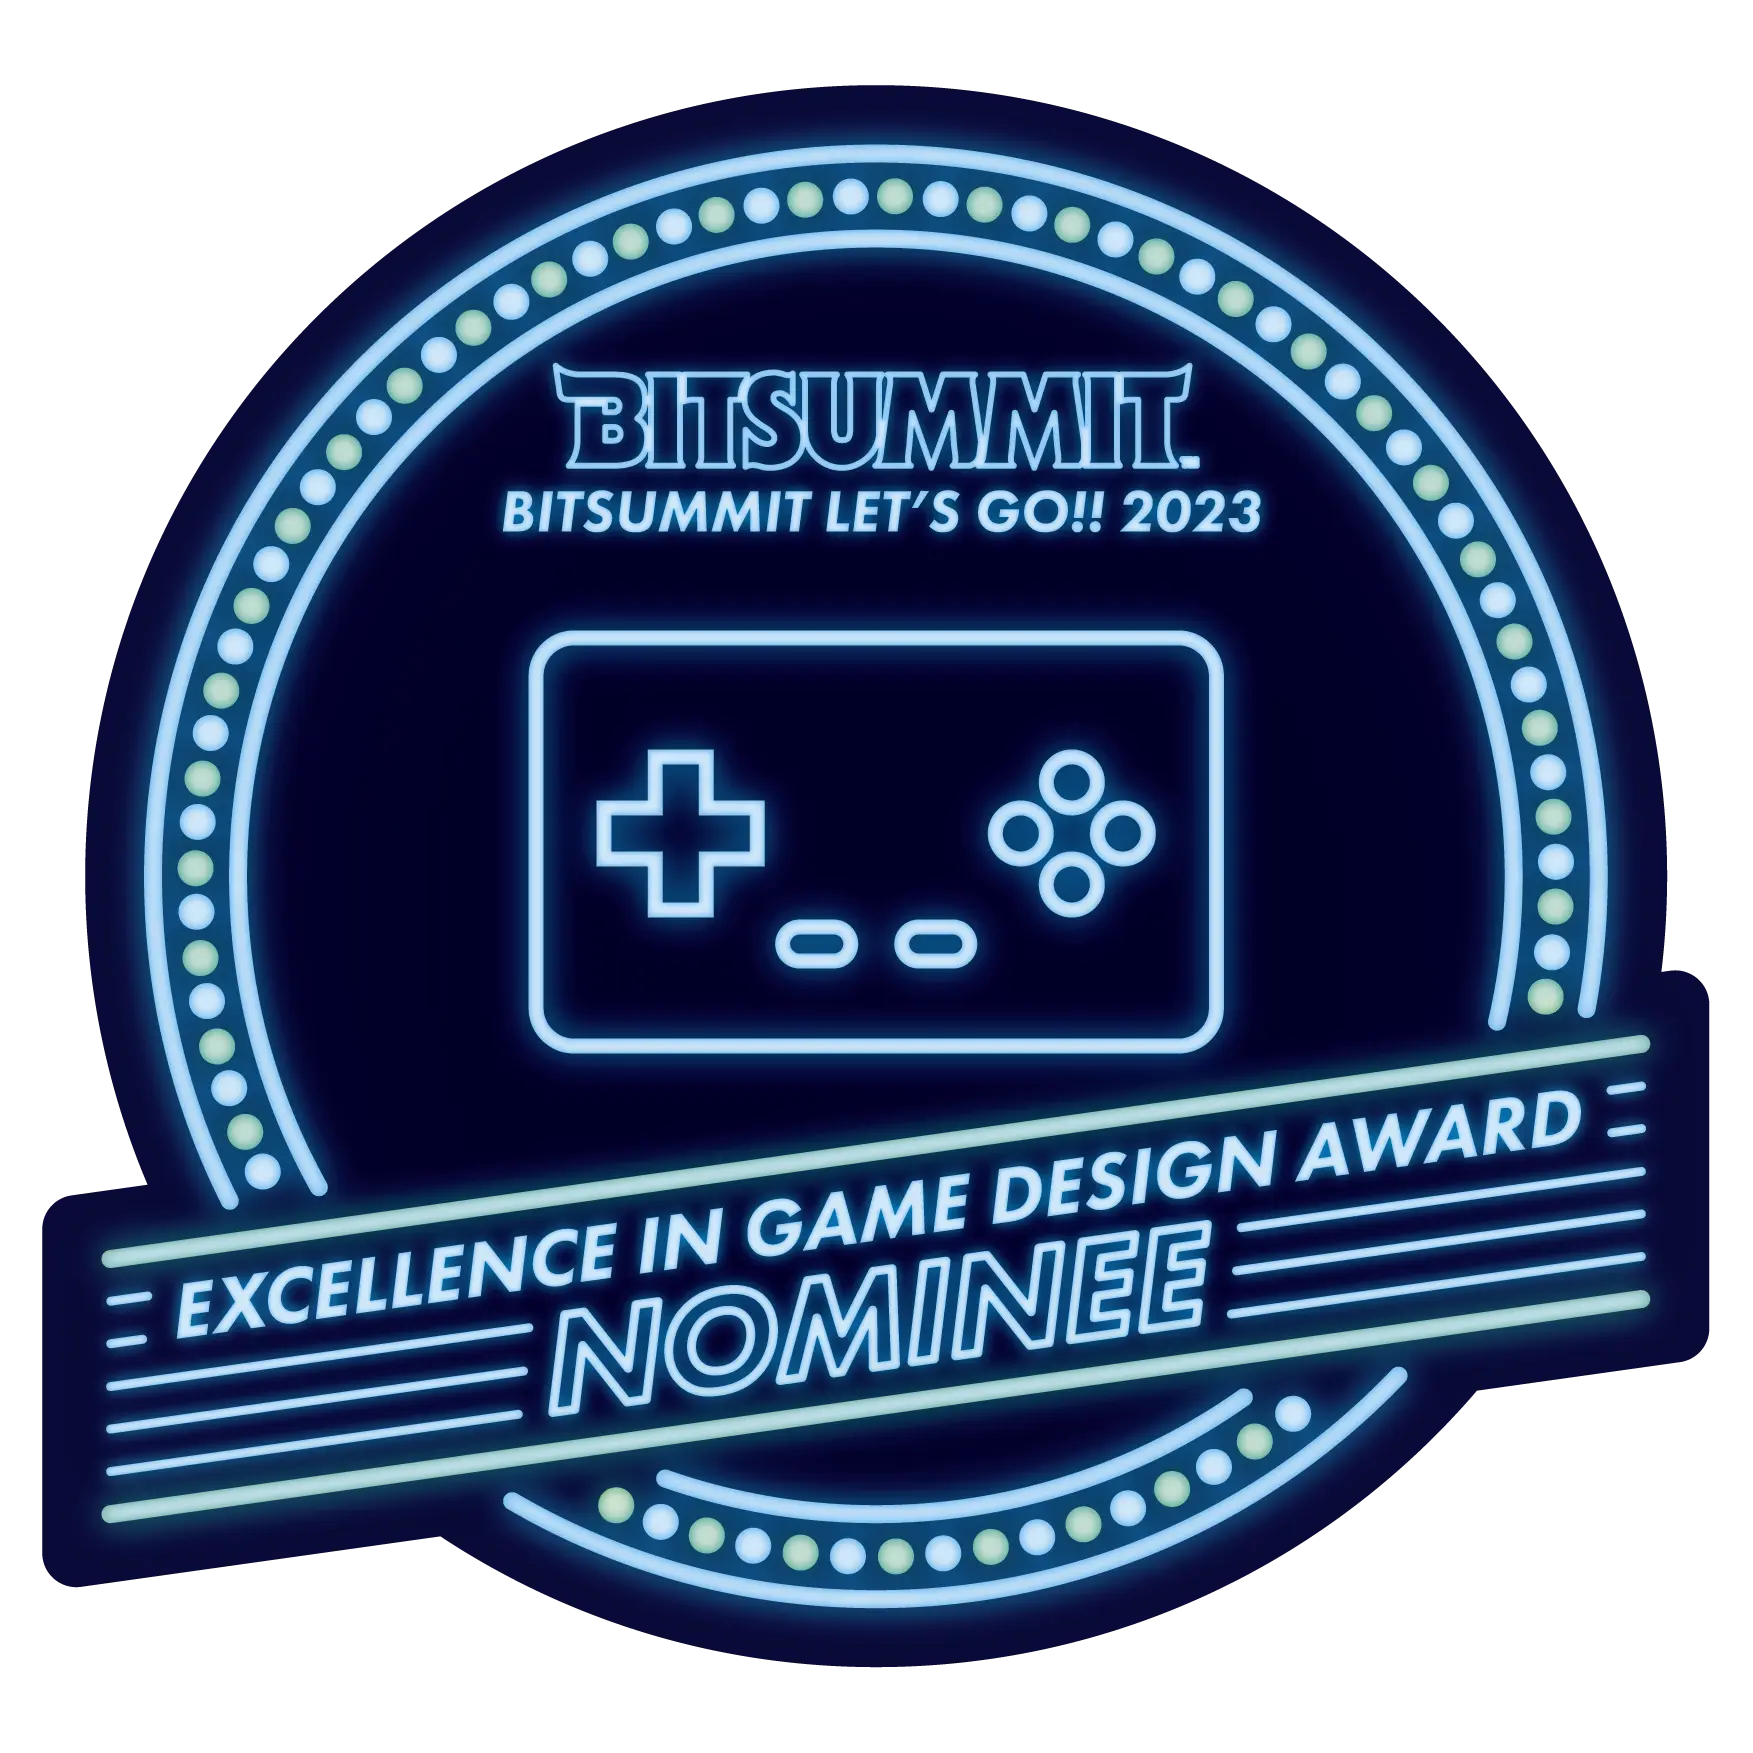 Bit Summit Let's Go! 2023 ゲームデザイン最優秀賞 ノミネート